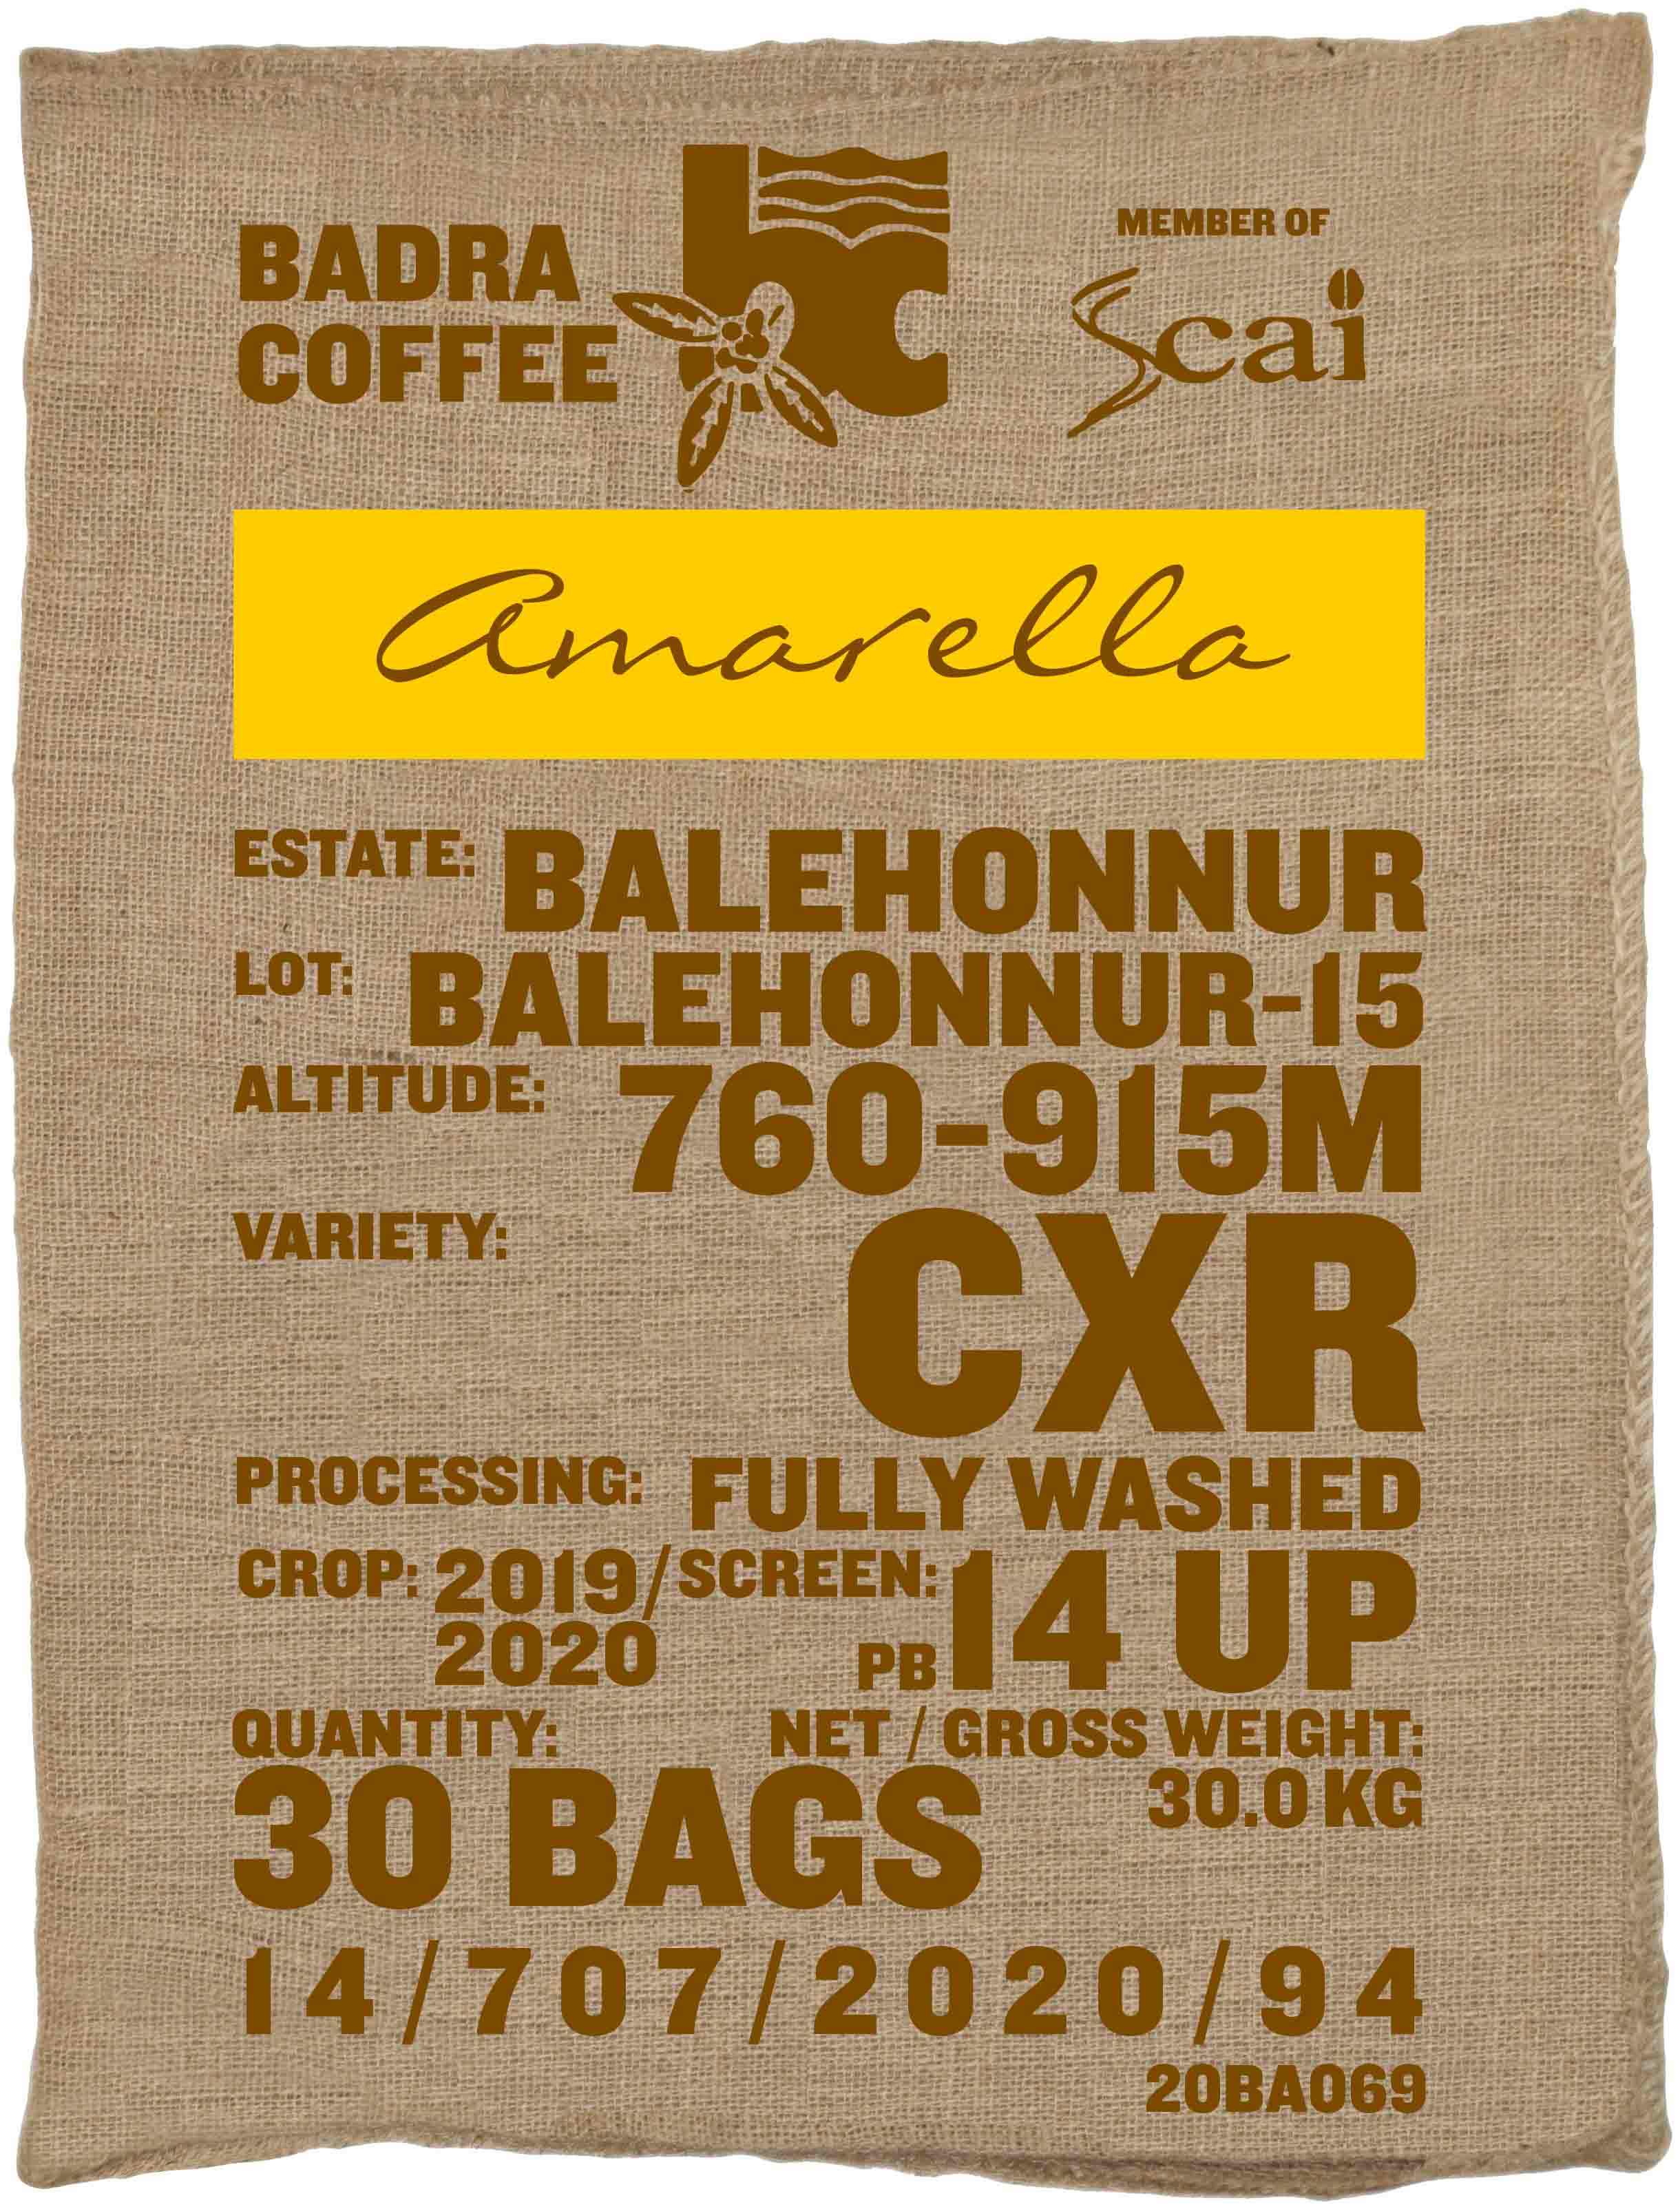 Ein Rohkaffeesack amarella Rohkaffee Varietät CxR. Badra Estates Lot Balehonnur 15.